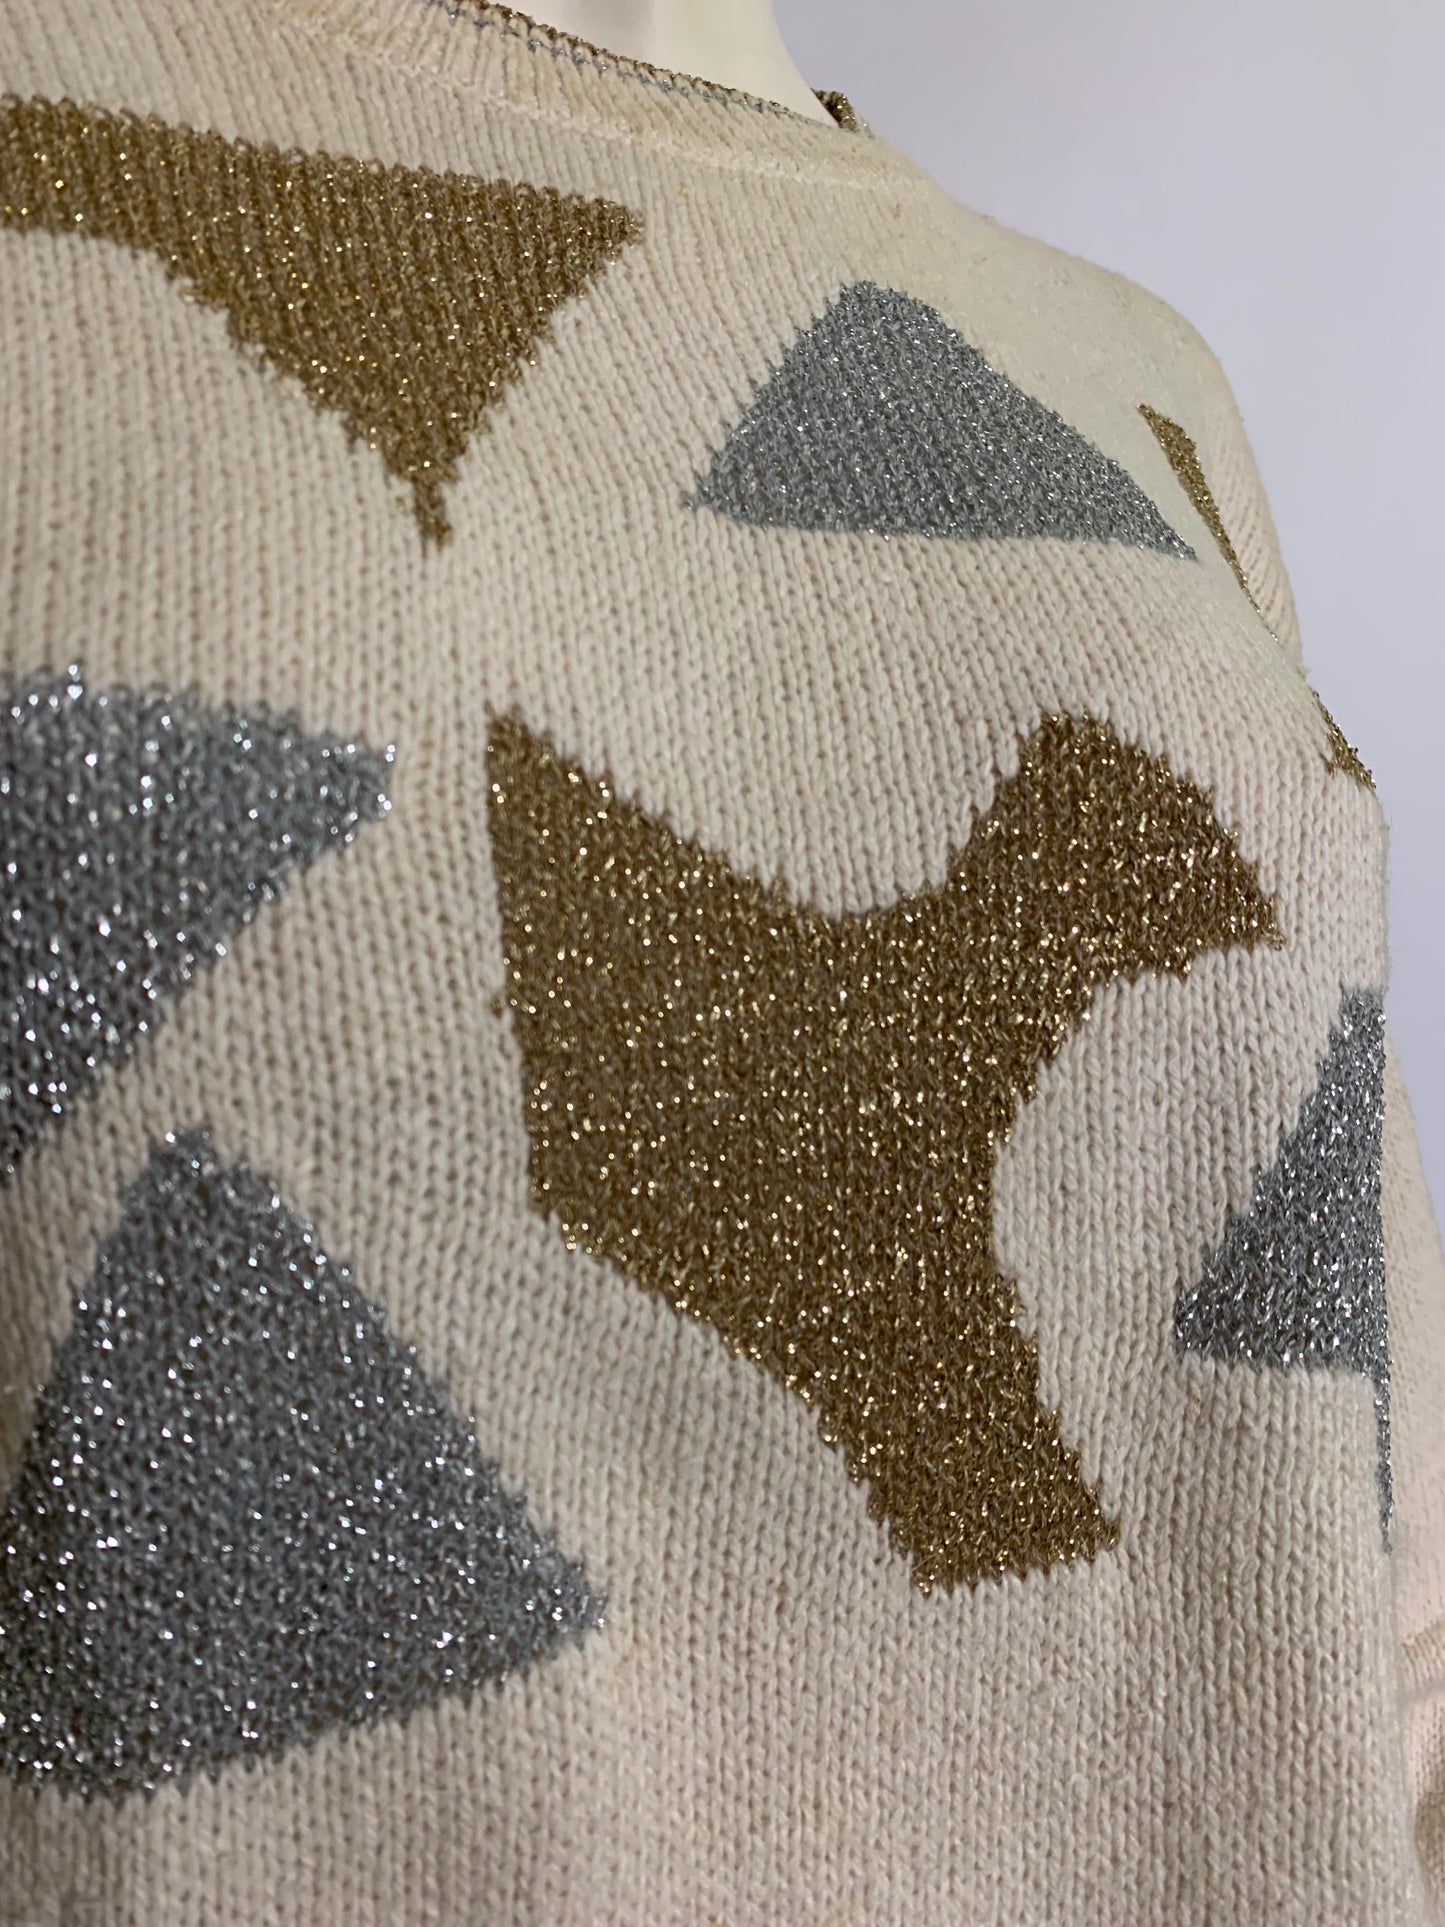 Angora Blend Sweater with Gold and Silver Metallic Geometric Design circa 1980s